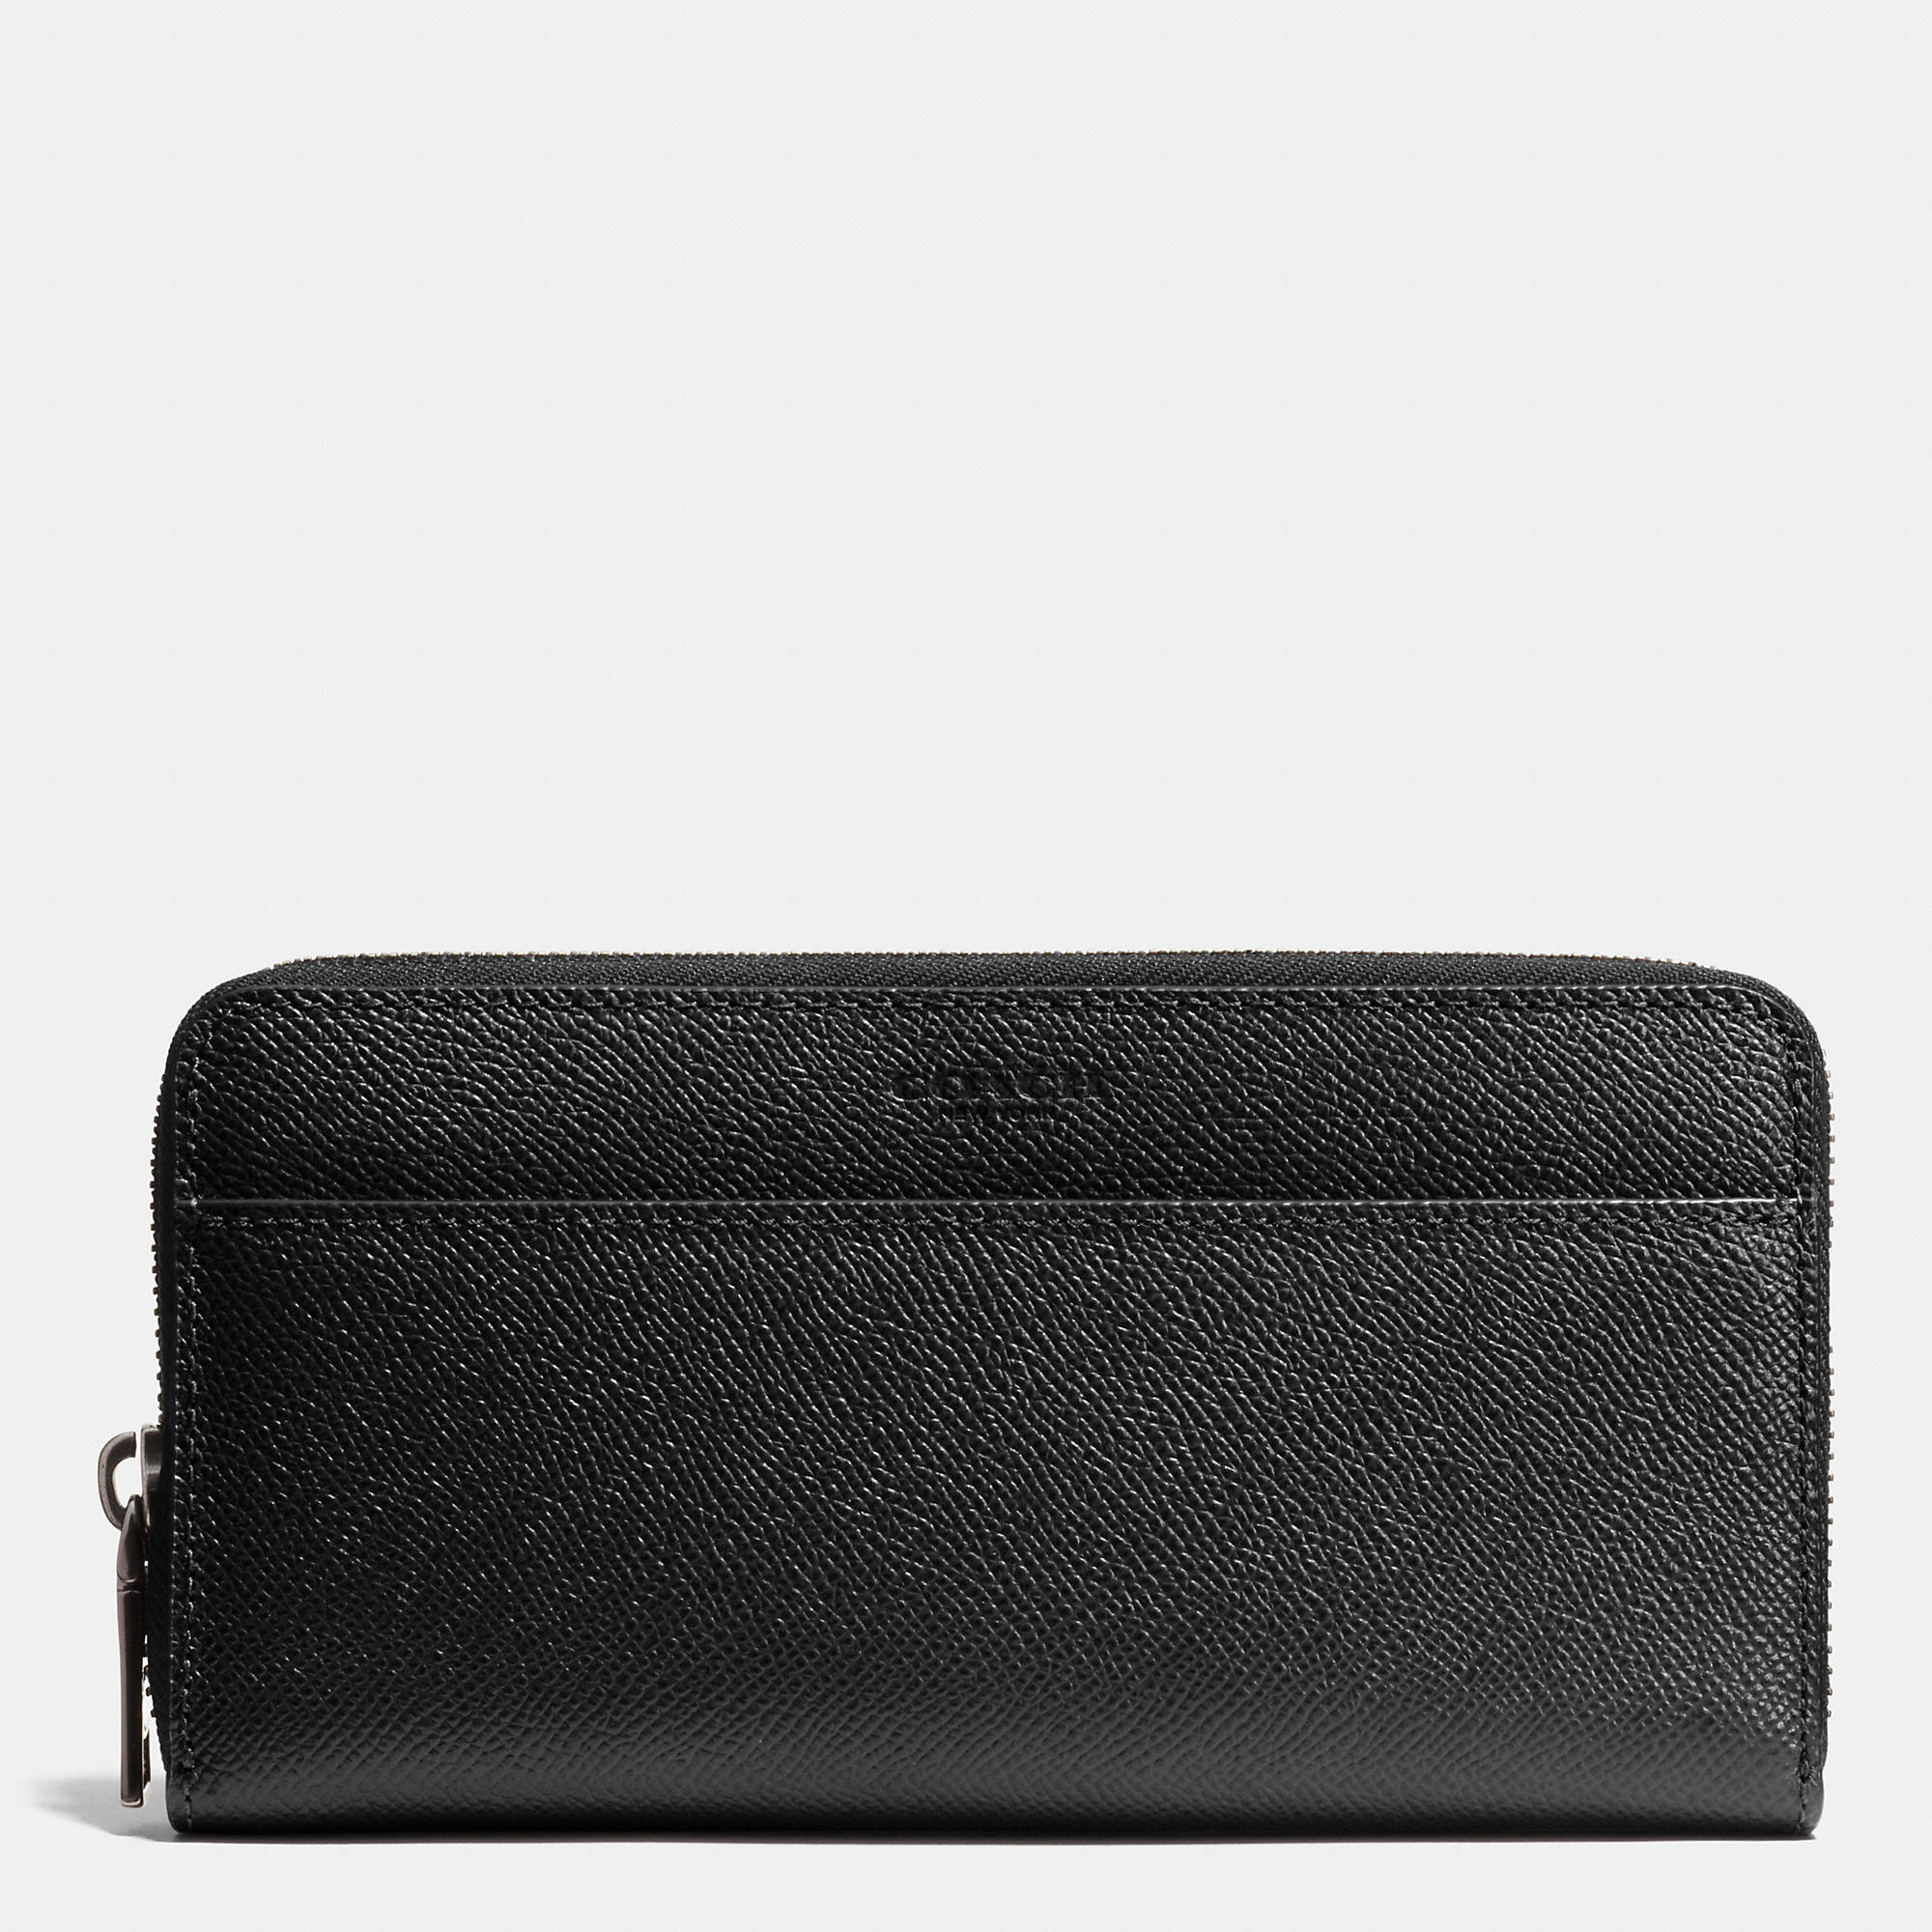 COACH Accordion Wallet In Crossgrain Leather in Black for Men - Lyst